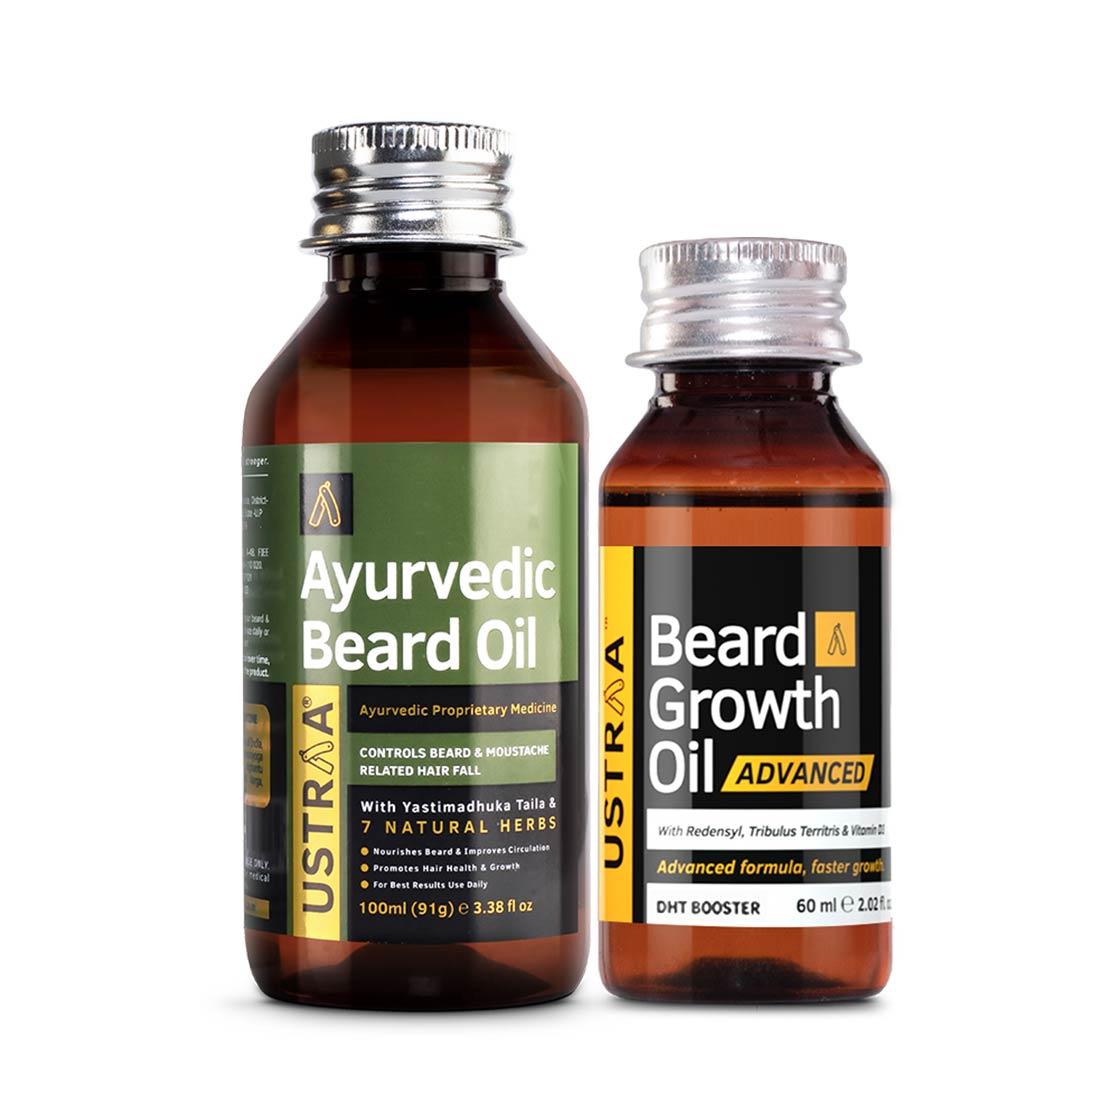 Ayurvedic Beard Oil & Beard Growth Oil Advanced